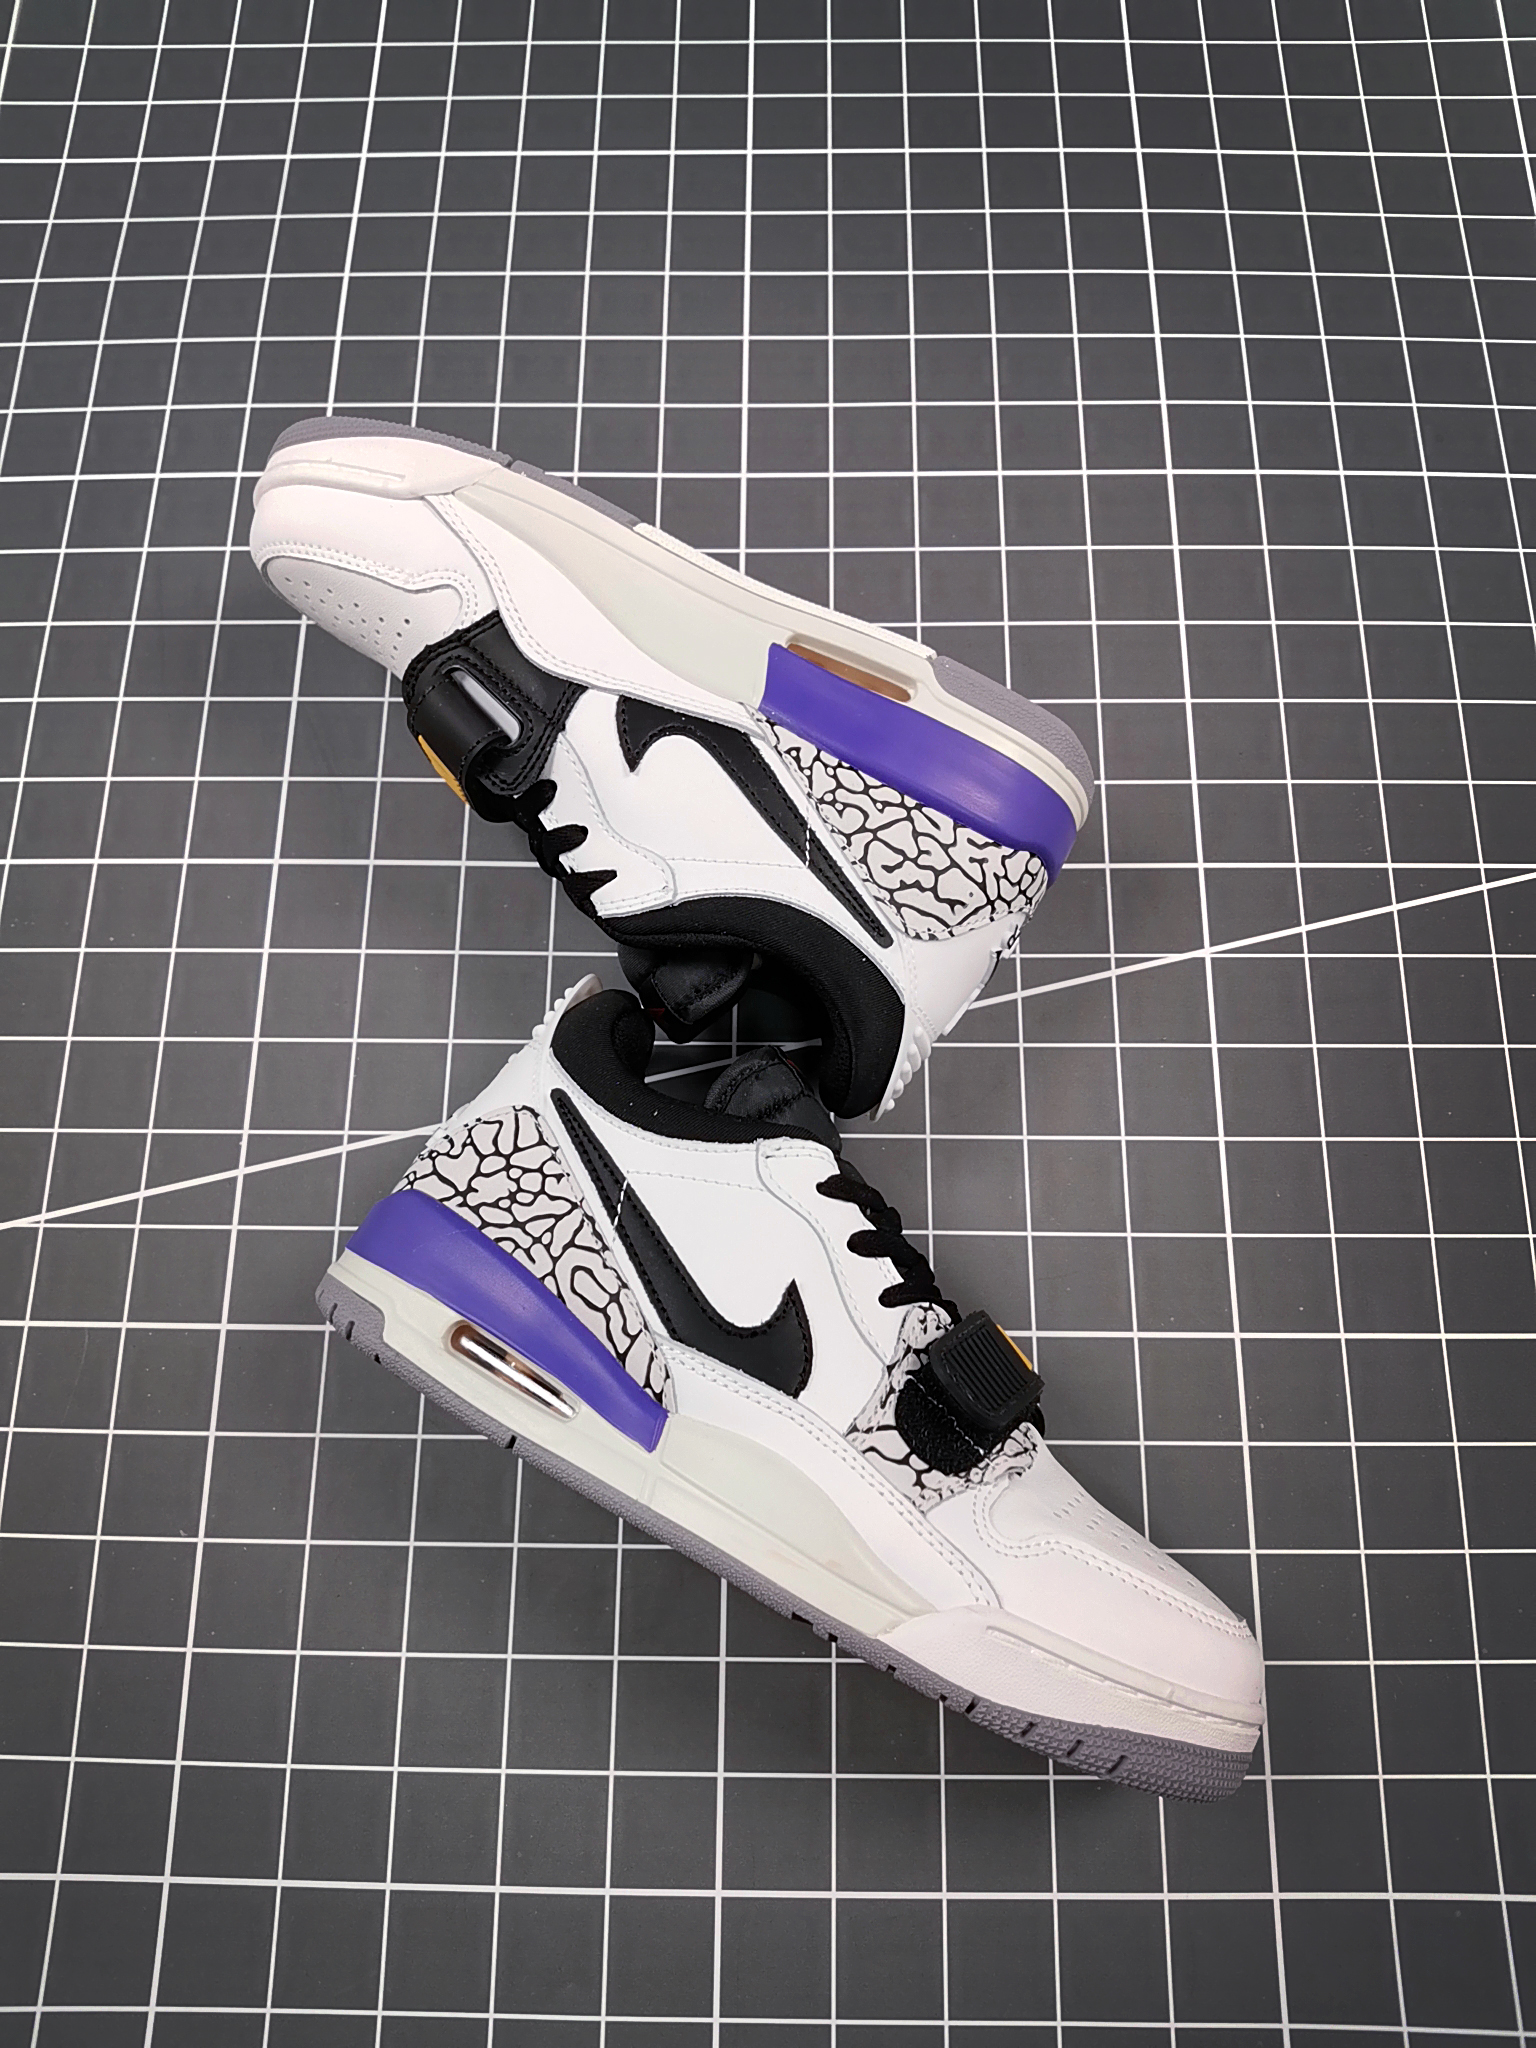 Air Jordan Legacy 312 Low White Cement Purple Black Shoes